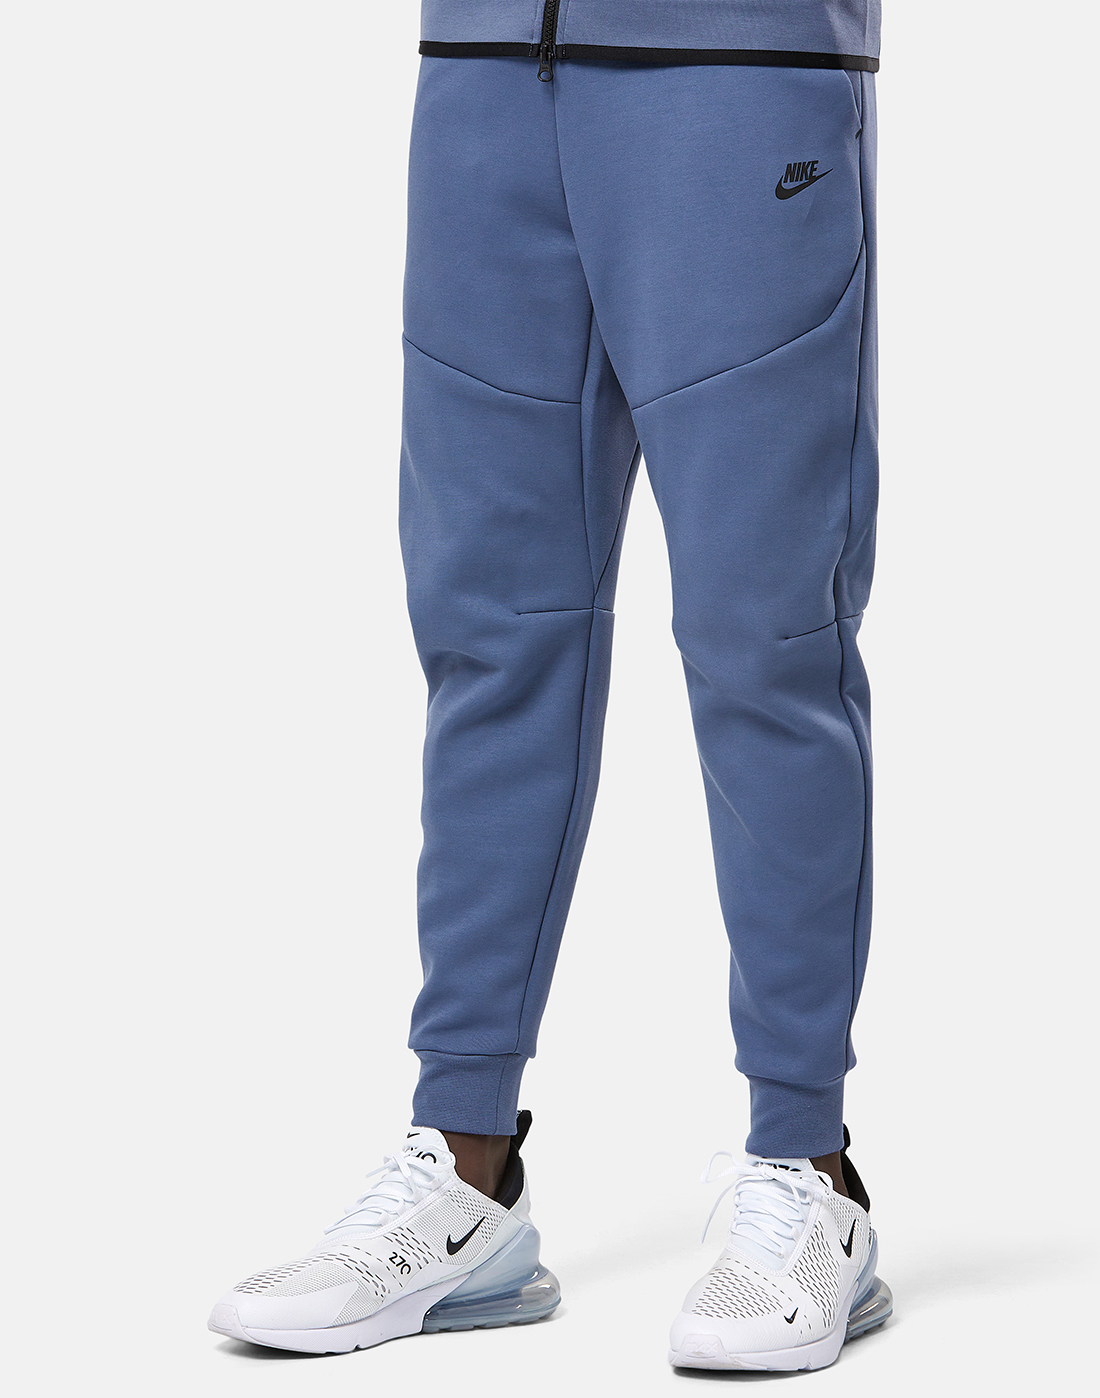 Nike Mens Tech Fleece Pants - Blue | Life Style Sports UK